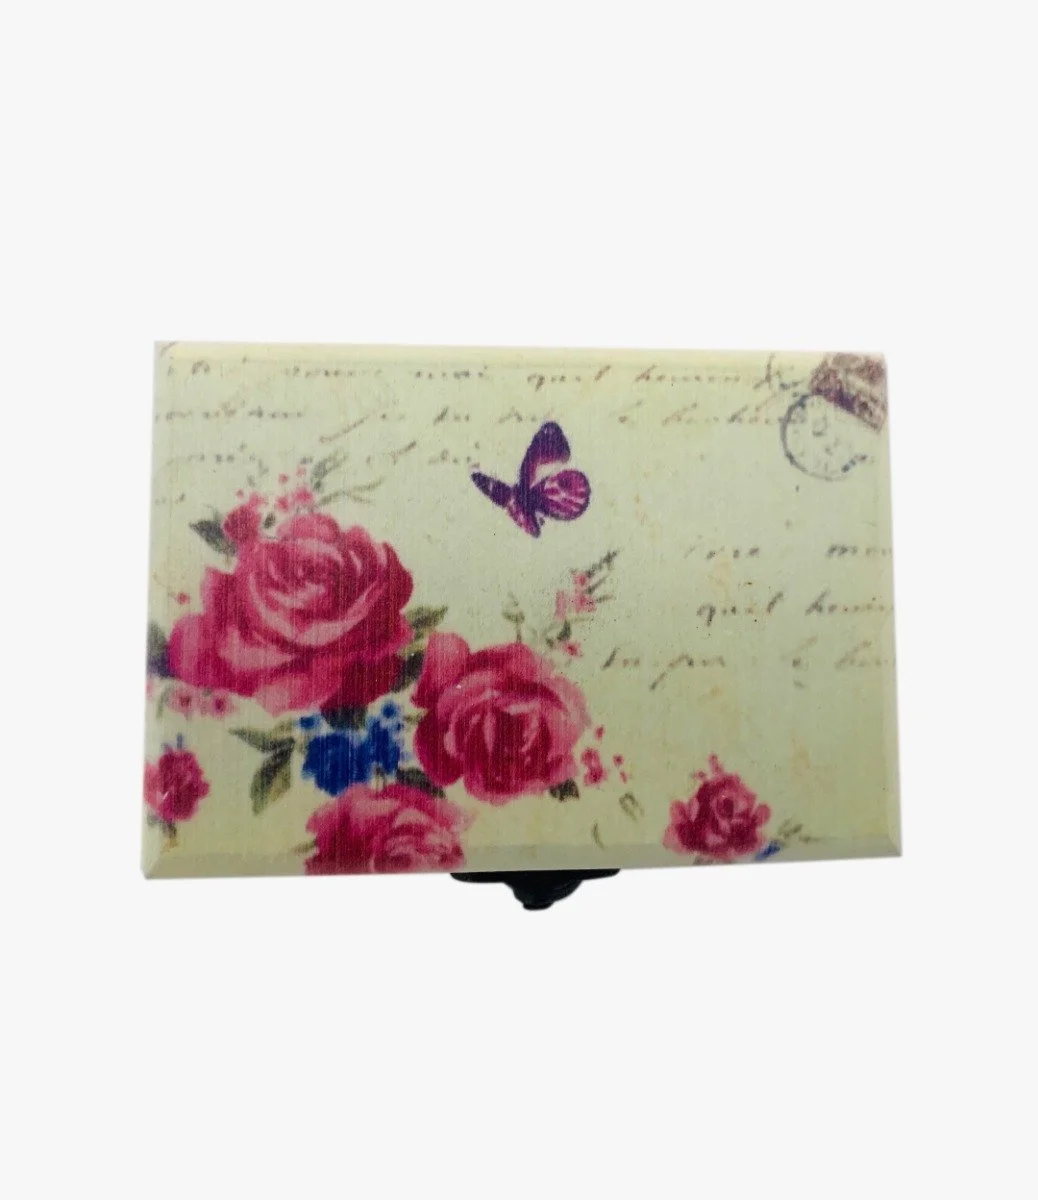 Rose Wooden Jewelry Box ( Medium)